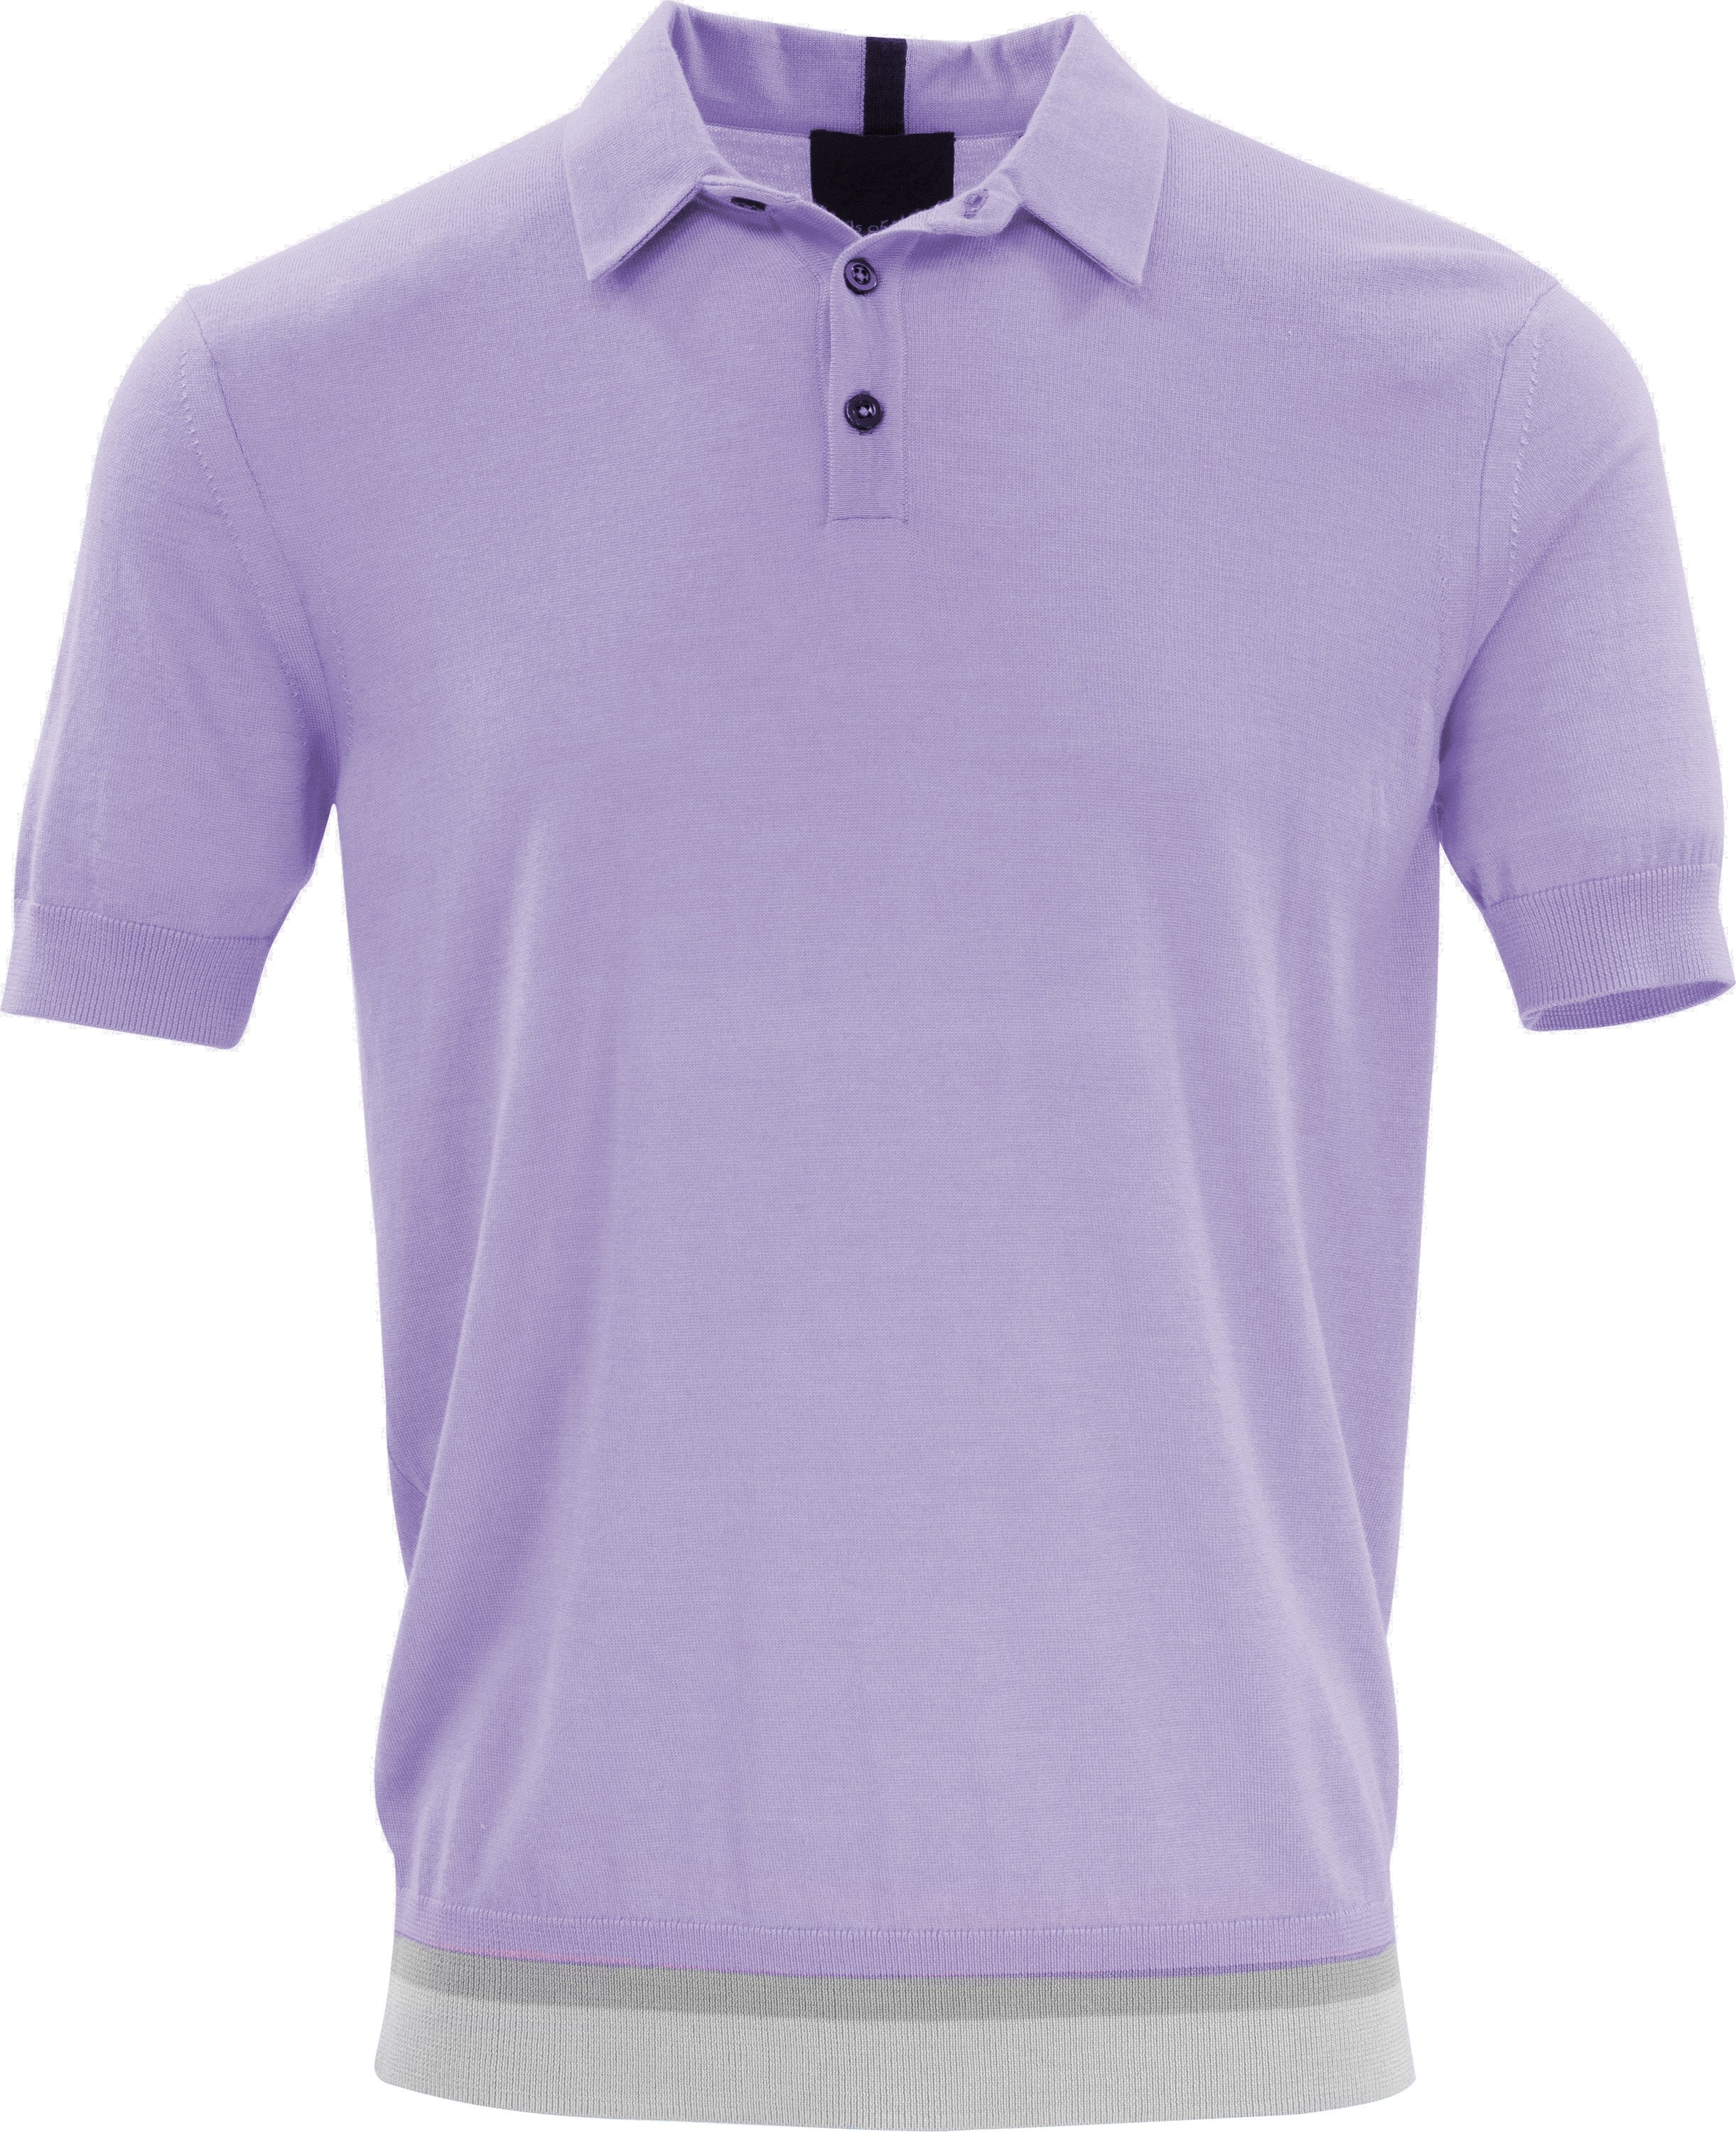 Men’s Pink / Purple Pilgrim Polo Shirt - Lavender Extra Large Lords of Harlech